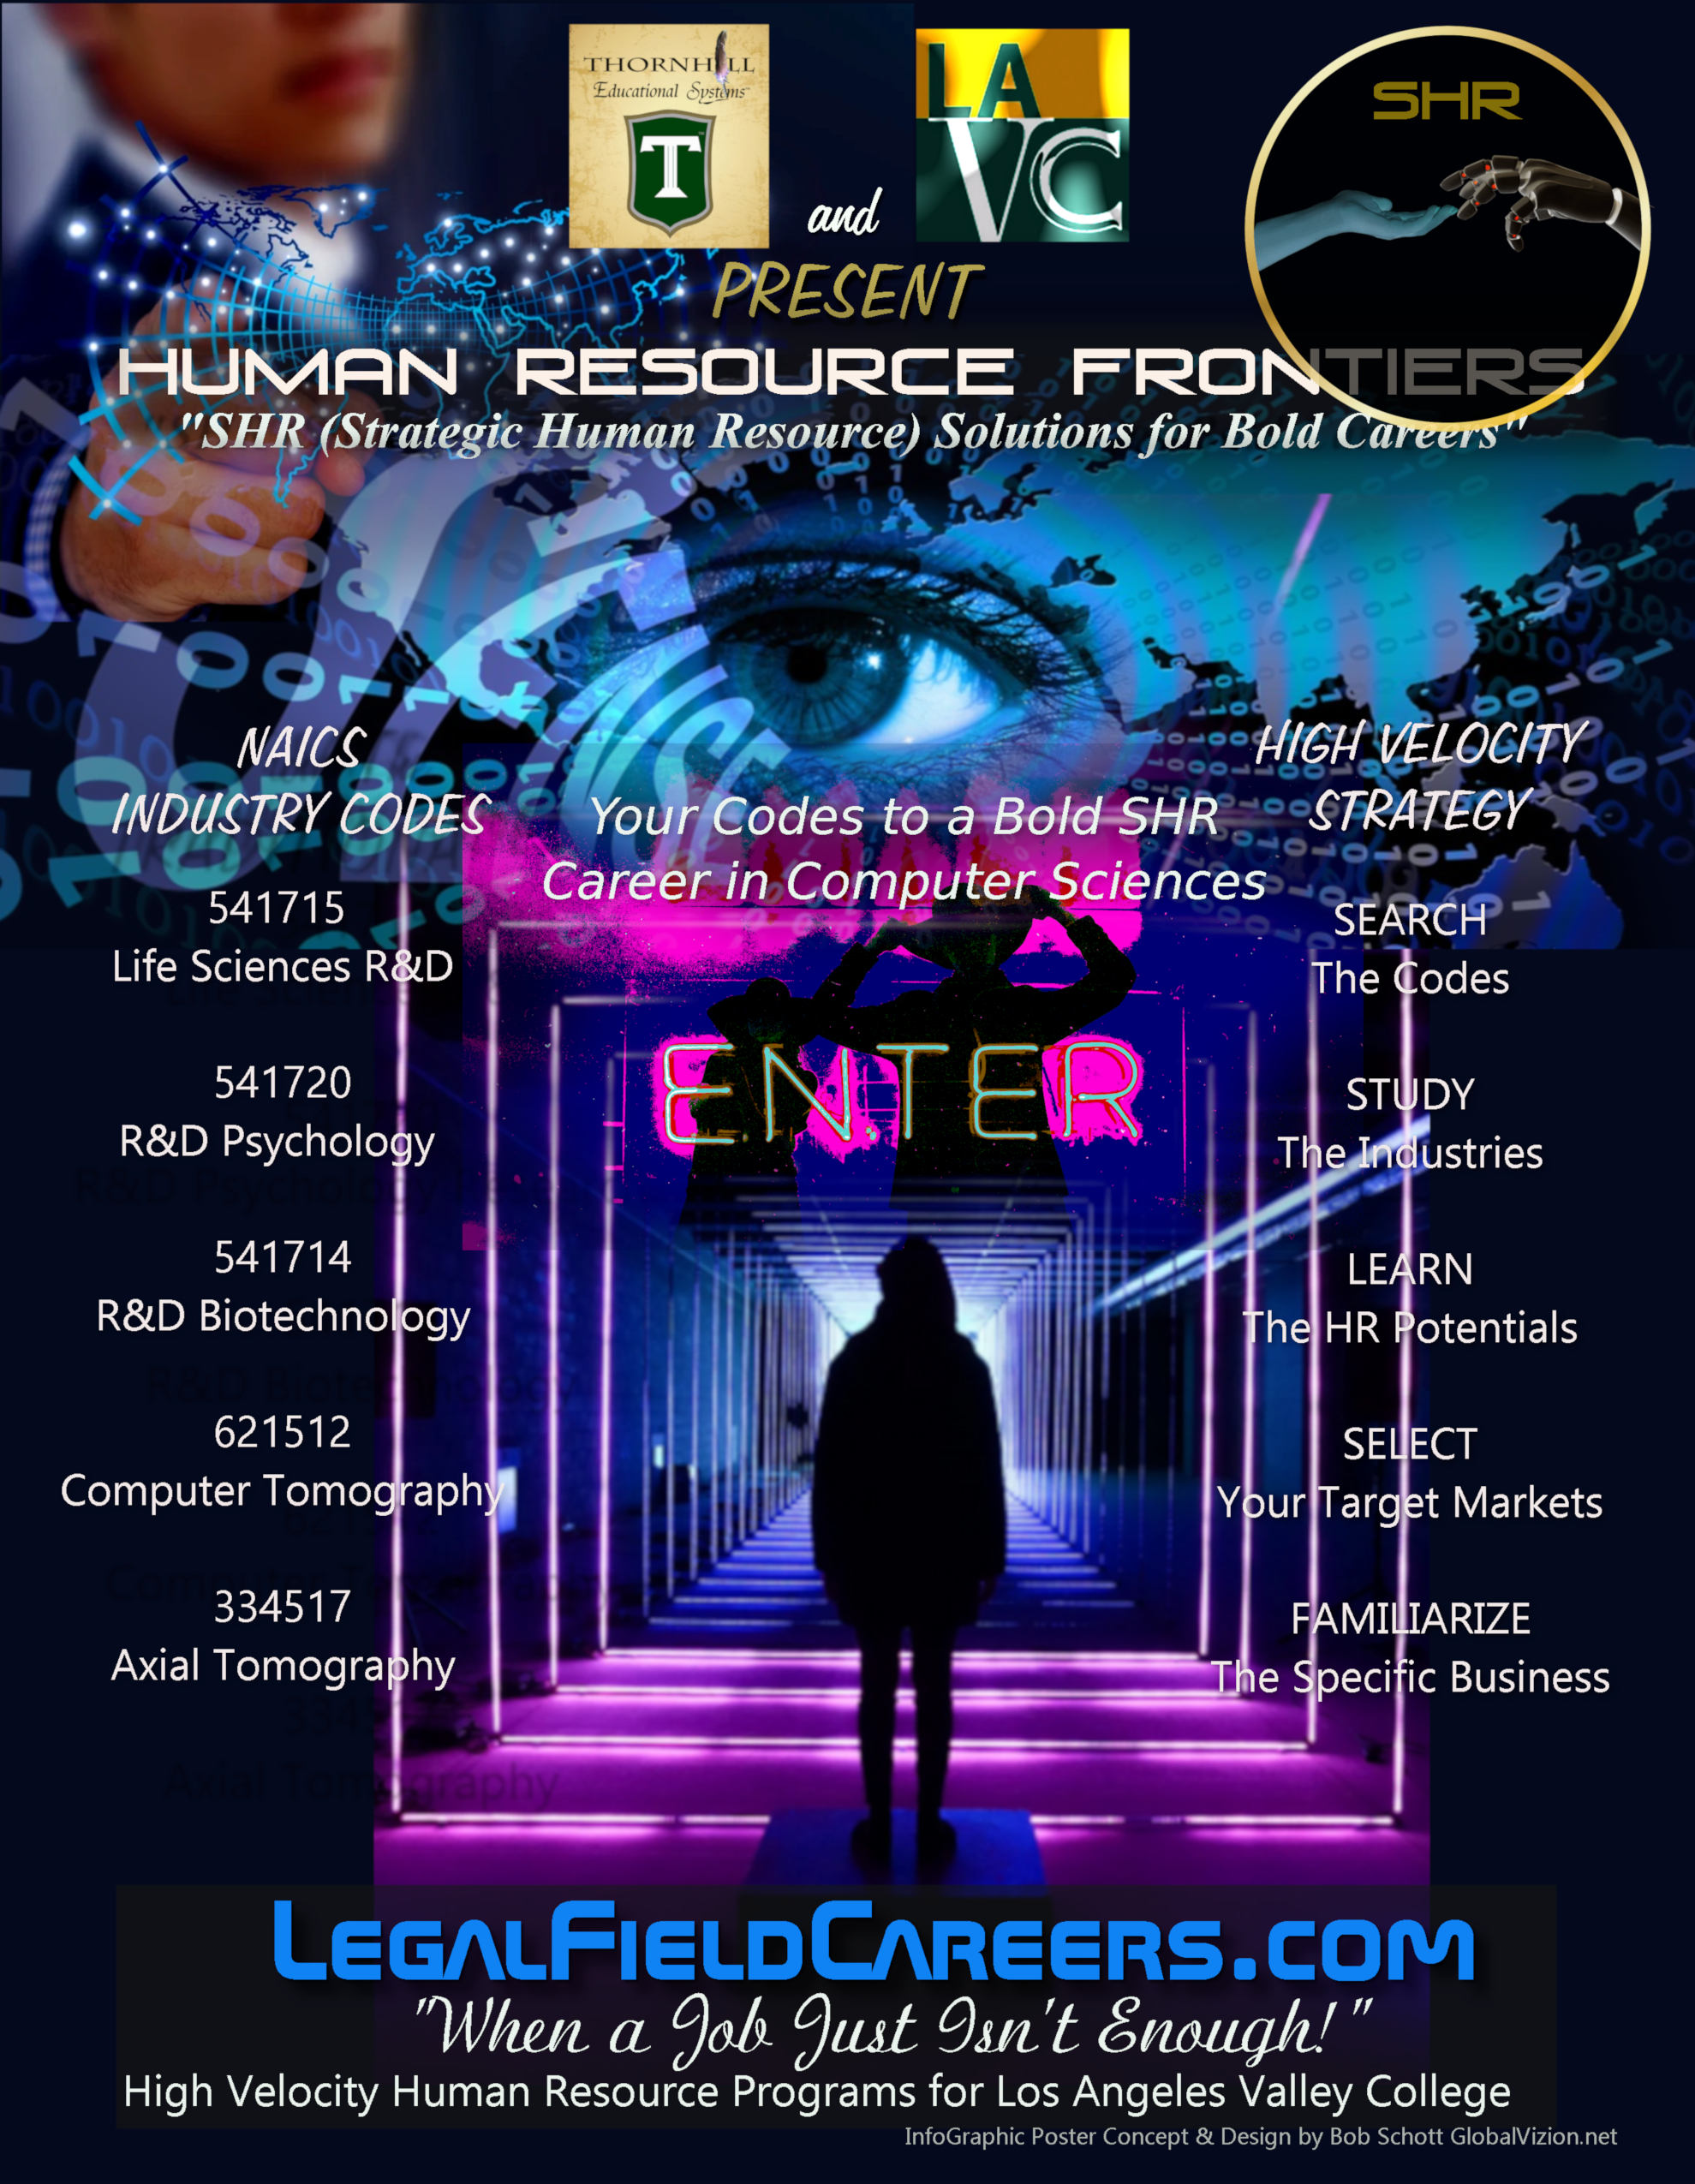 Human Resource careers in computer sciences